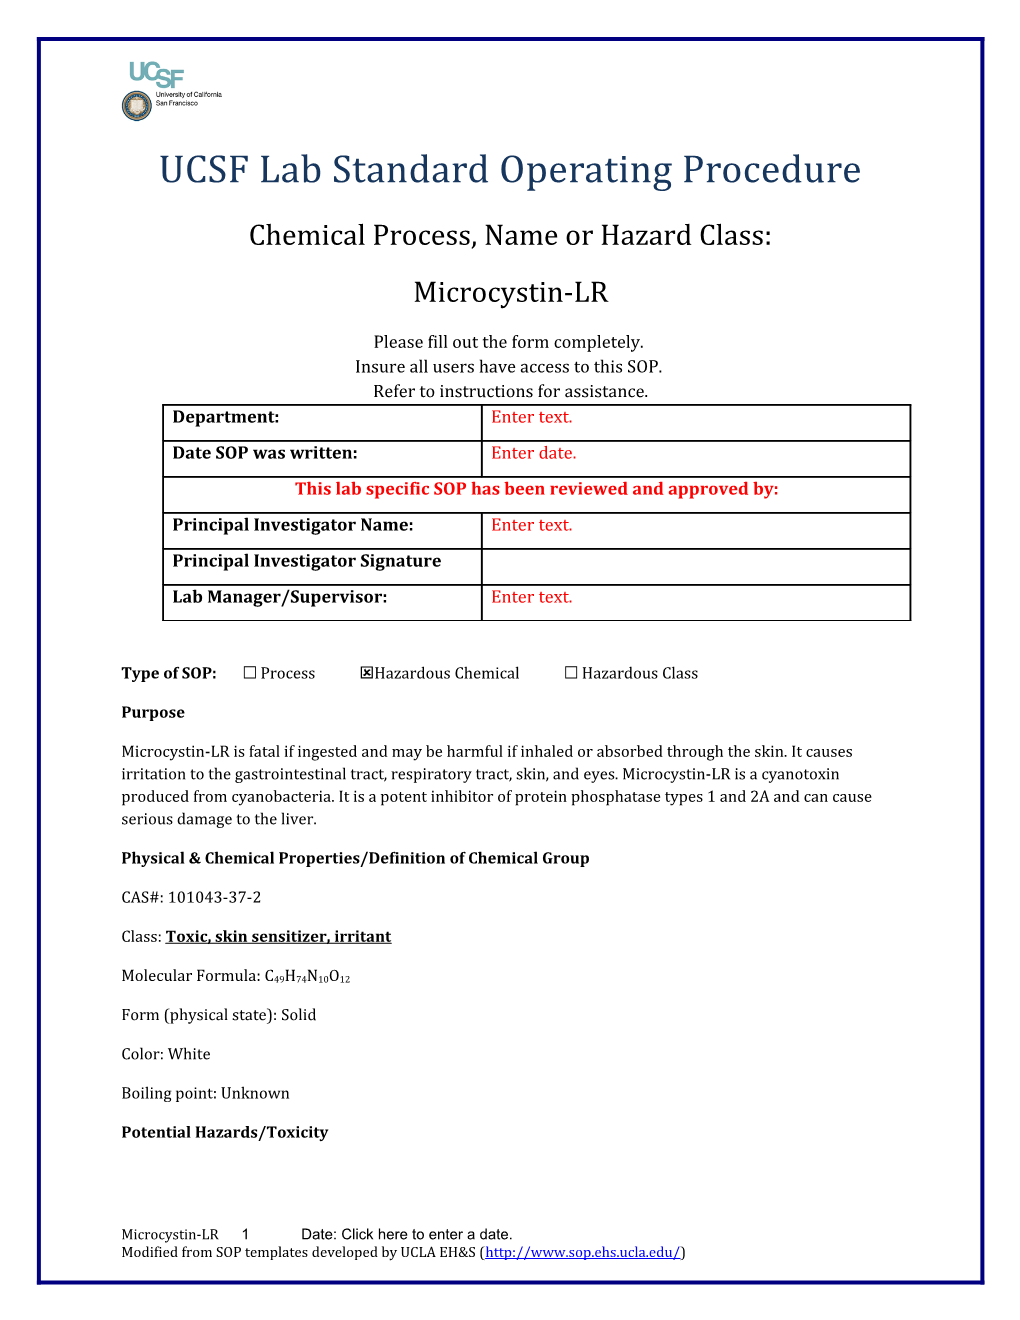 UCSF Lab Standard Operating Procedure s37